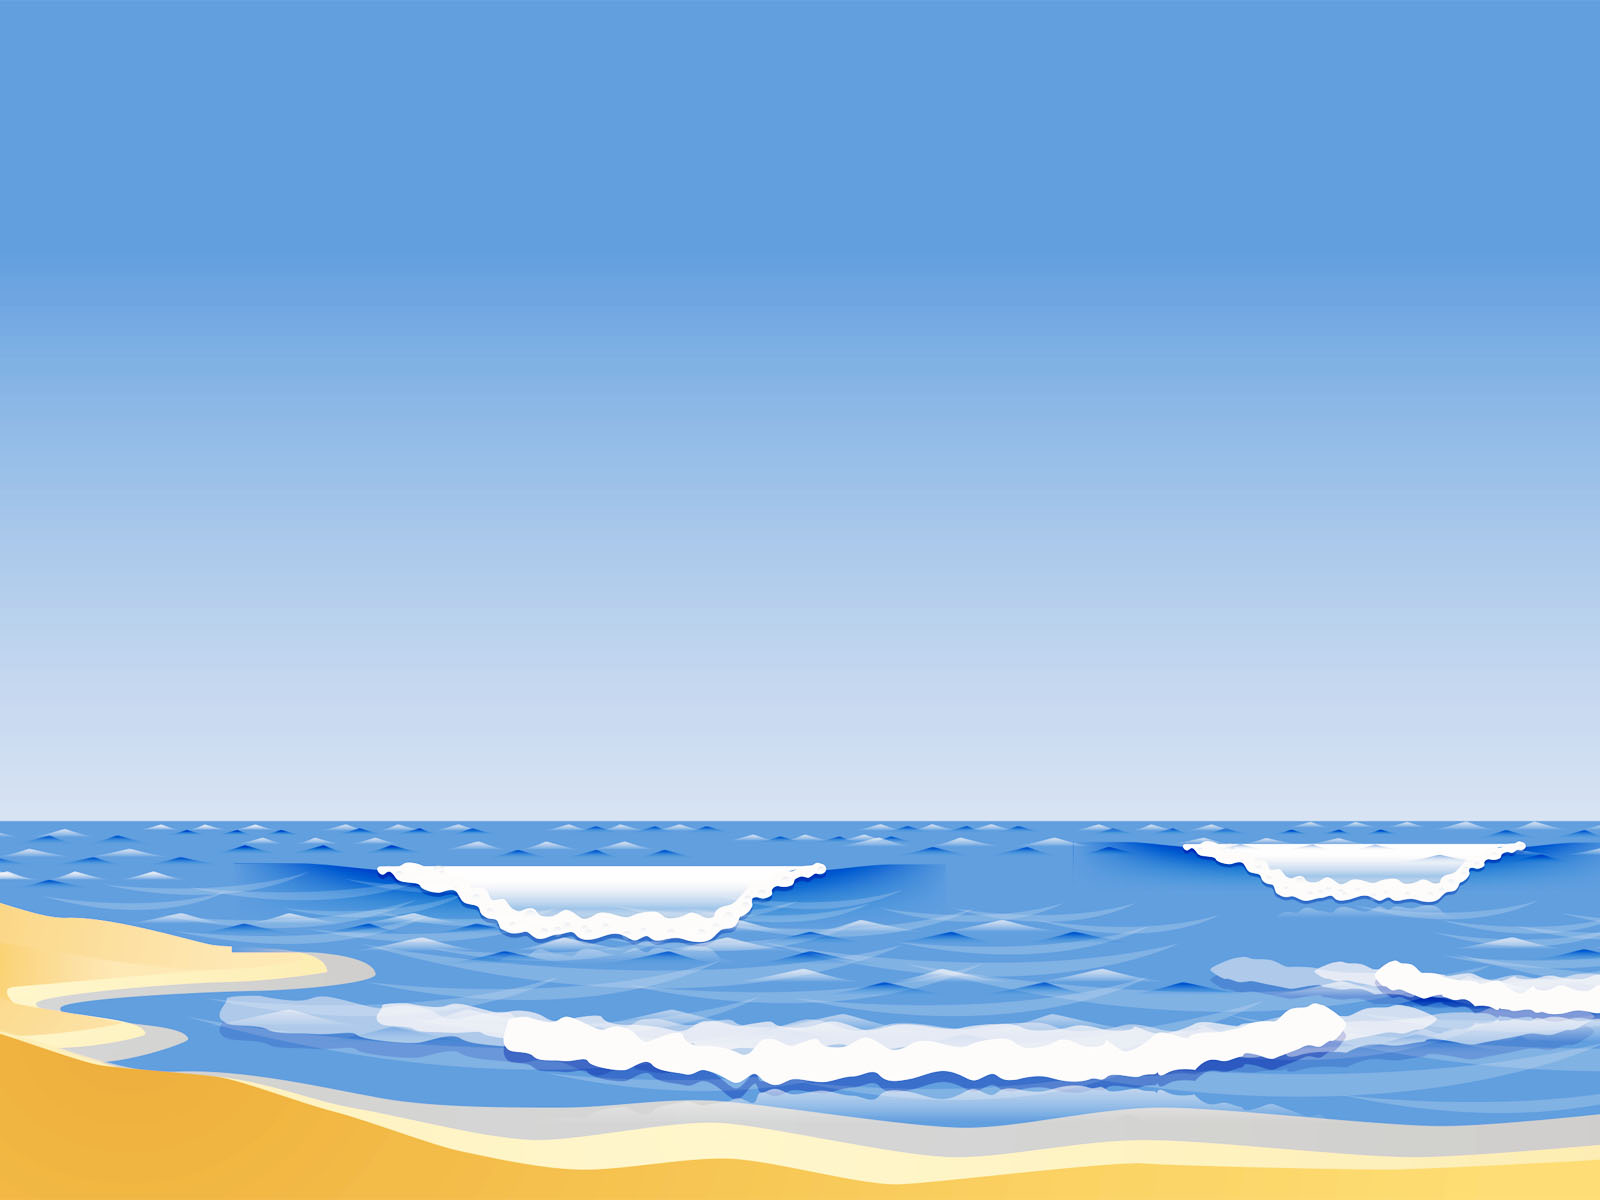 The Sandy Beach Blue Nature